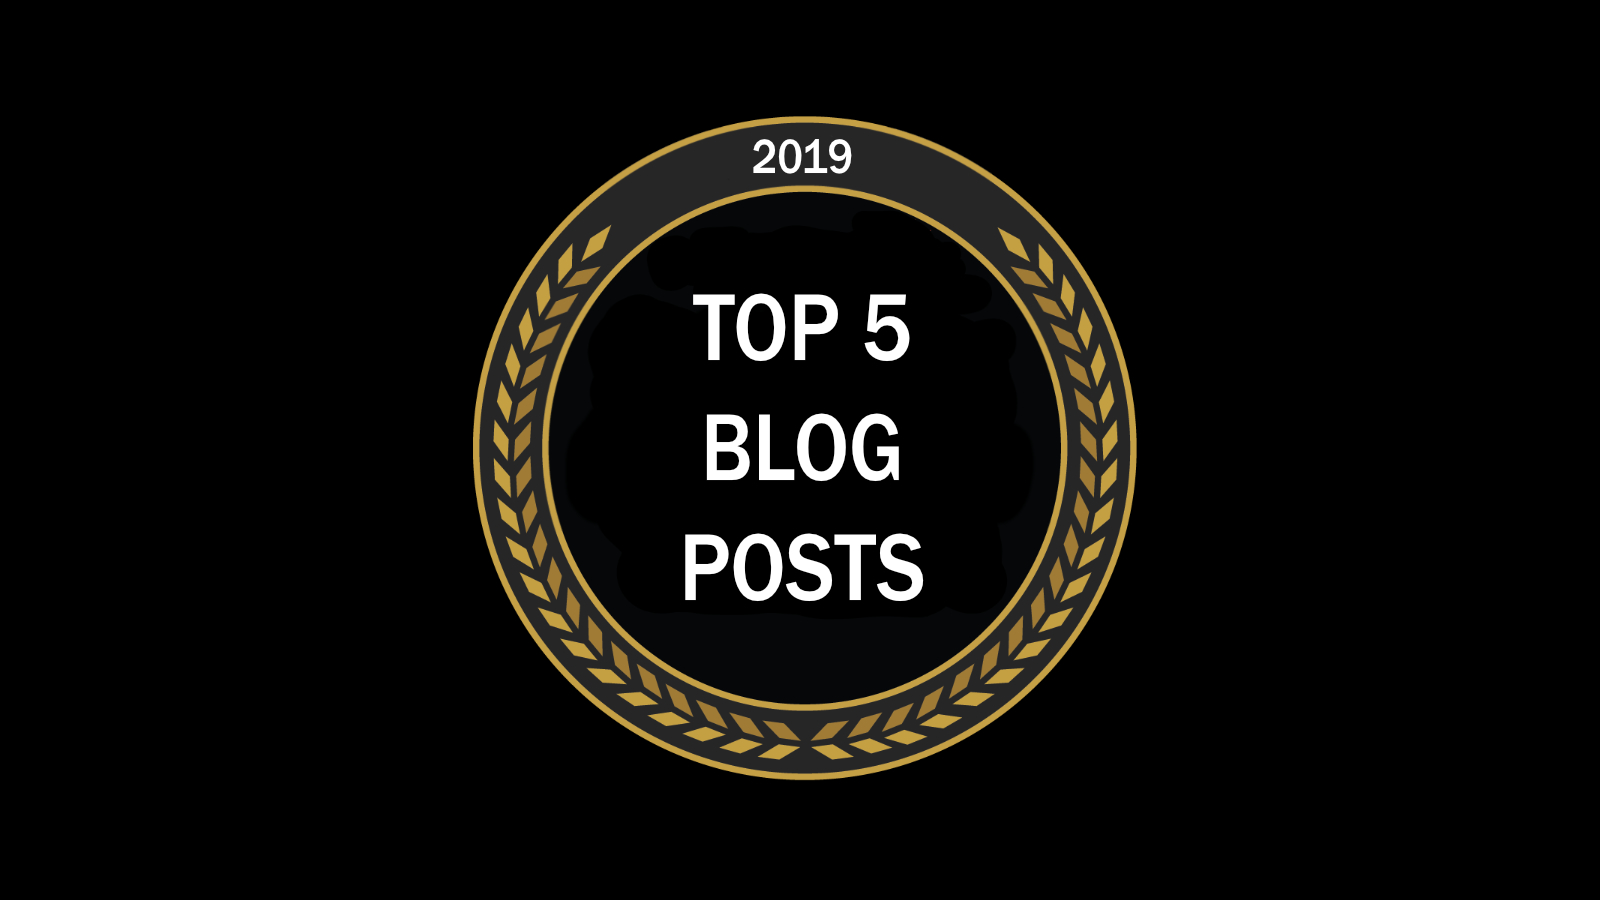 Top 5 Blog Posts